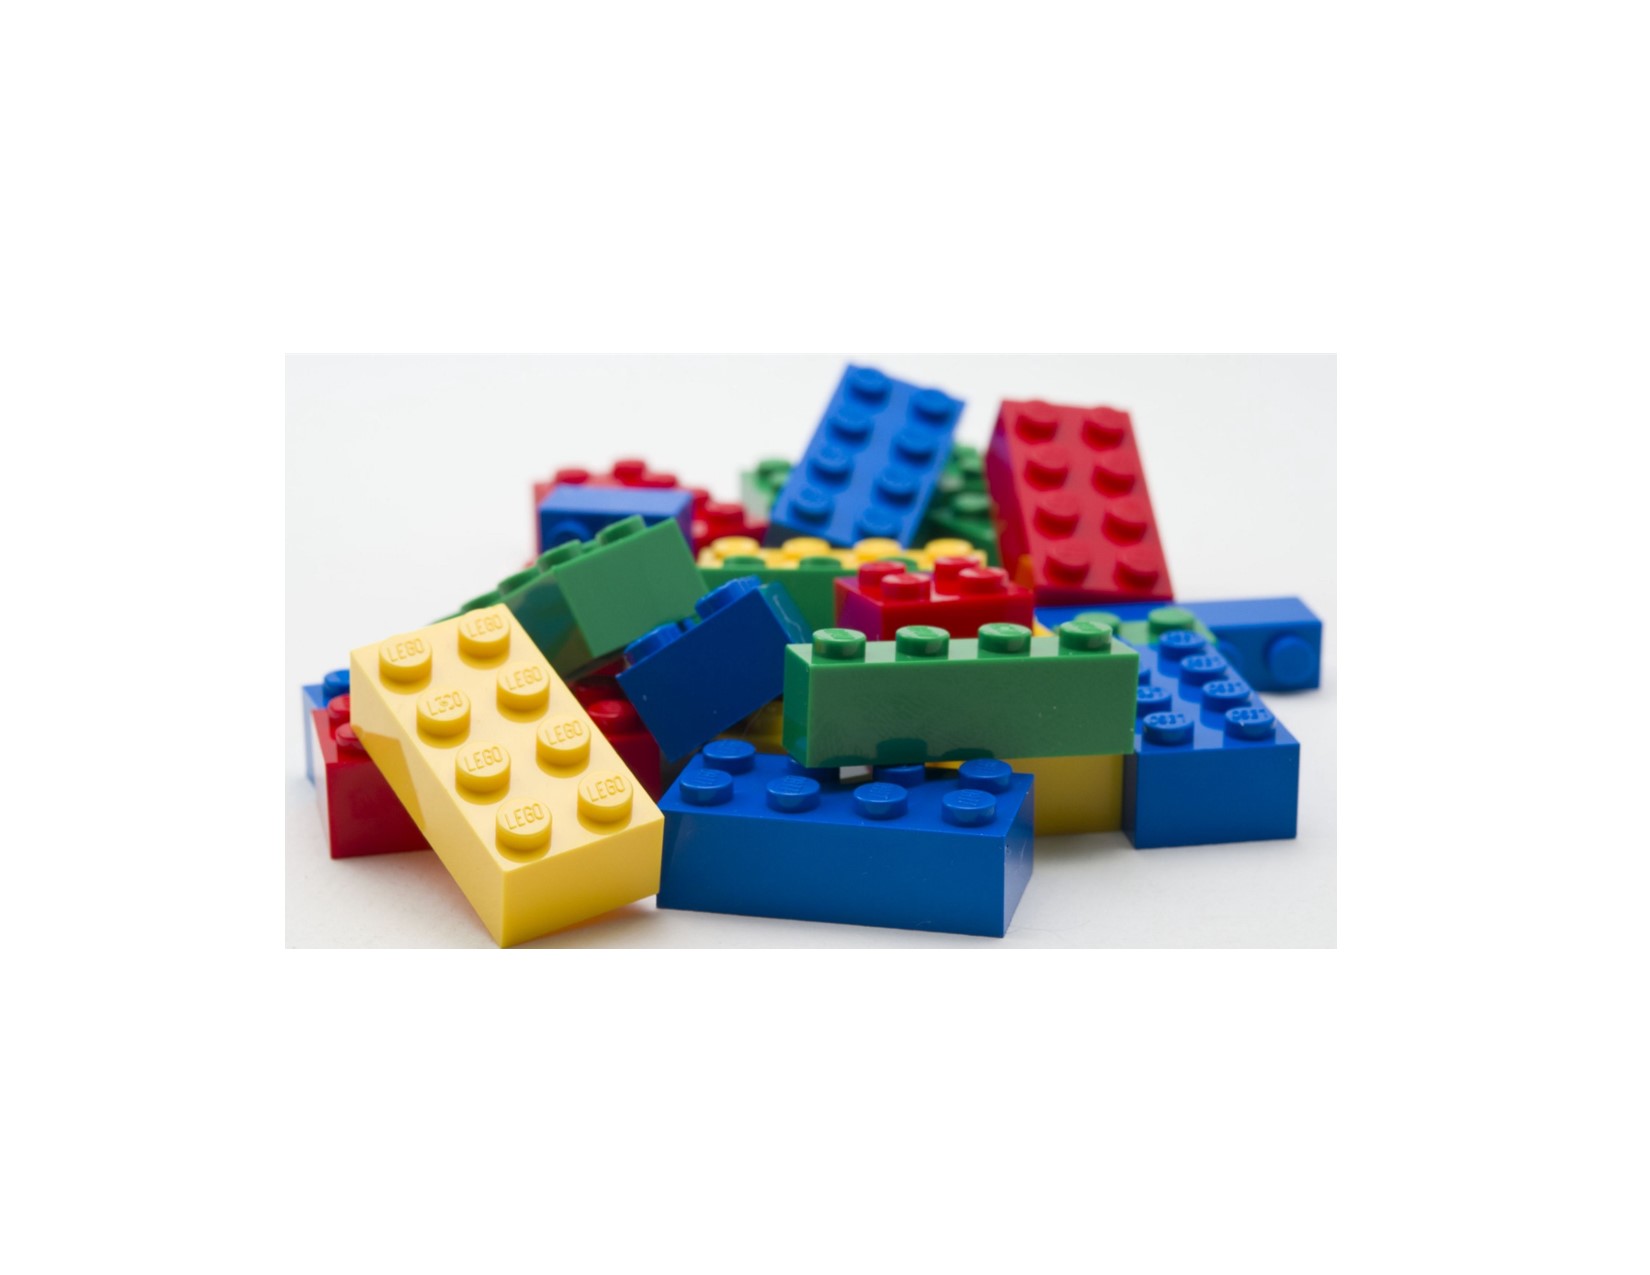 Pile of colorful LEGO bricks.